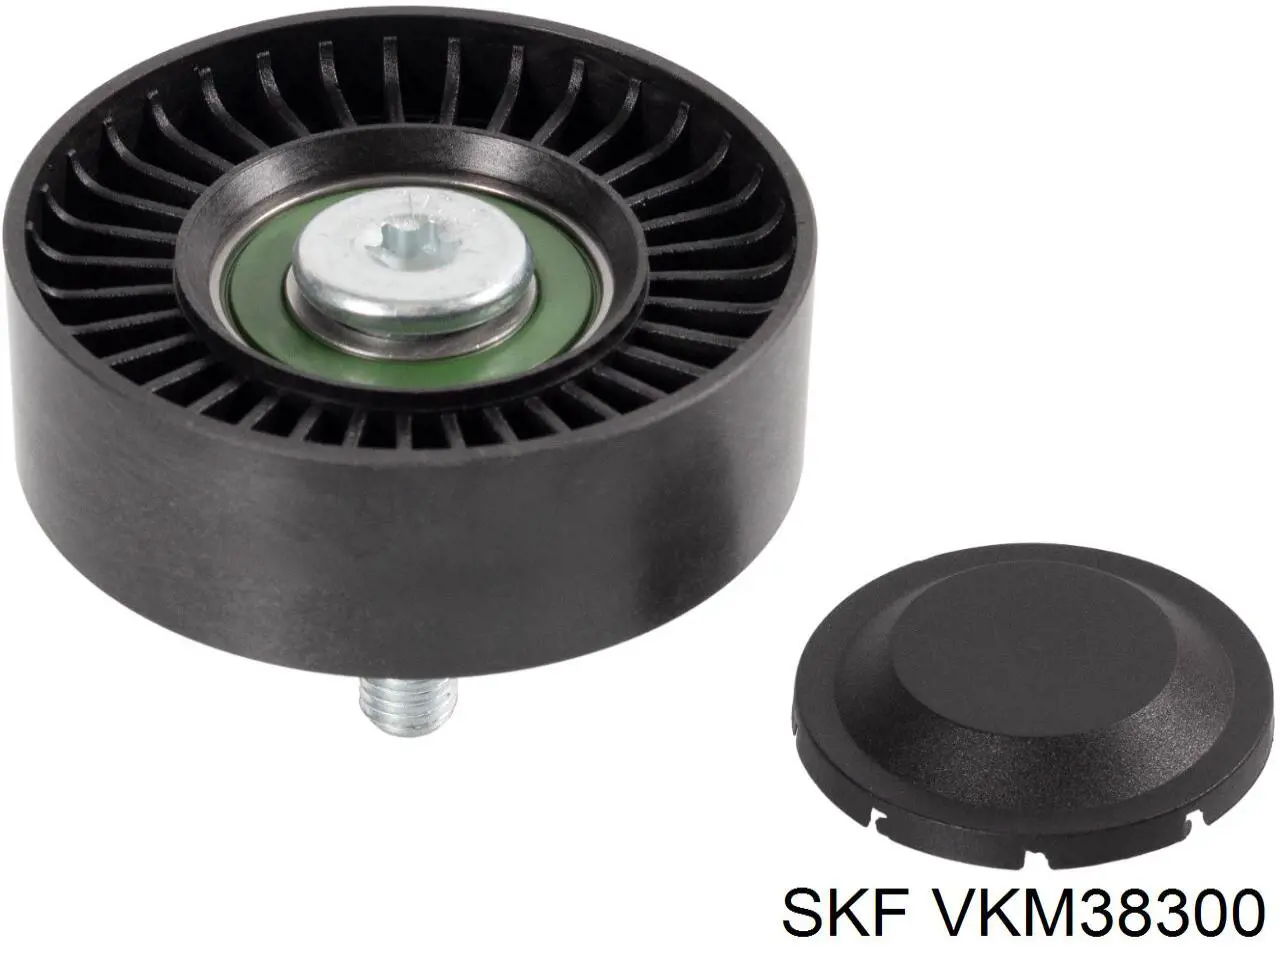 VKM 38300 SKF polea inversión / guía, correa poli v